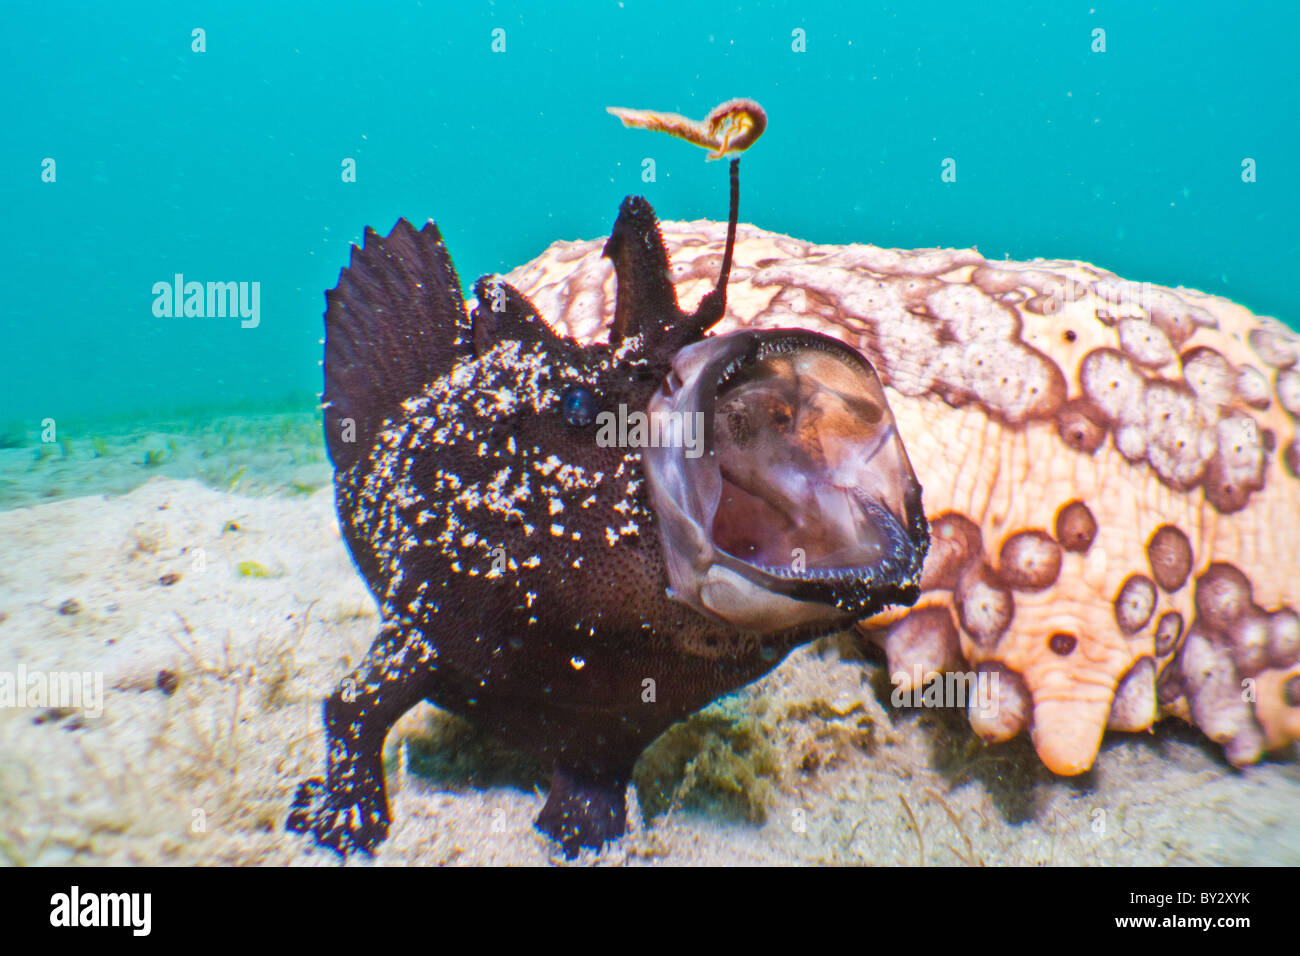 Black Frogfish Yawning with Sea Cucumber Stock Photo